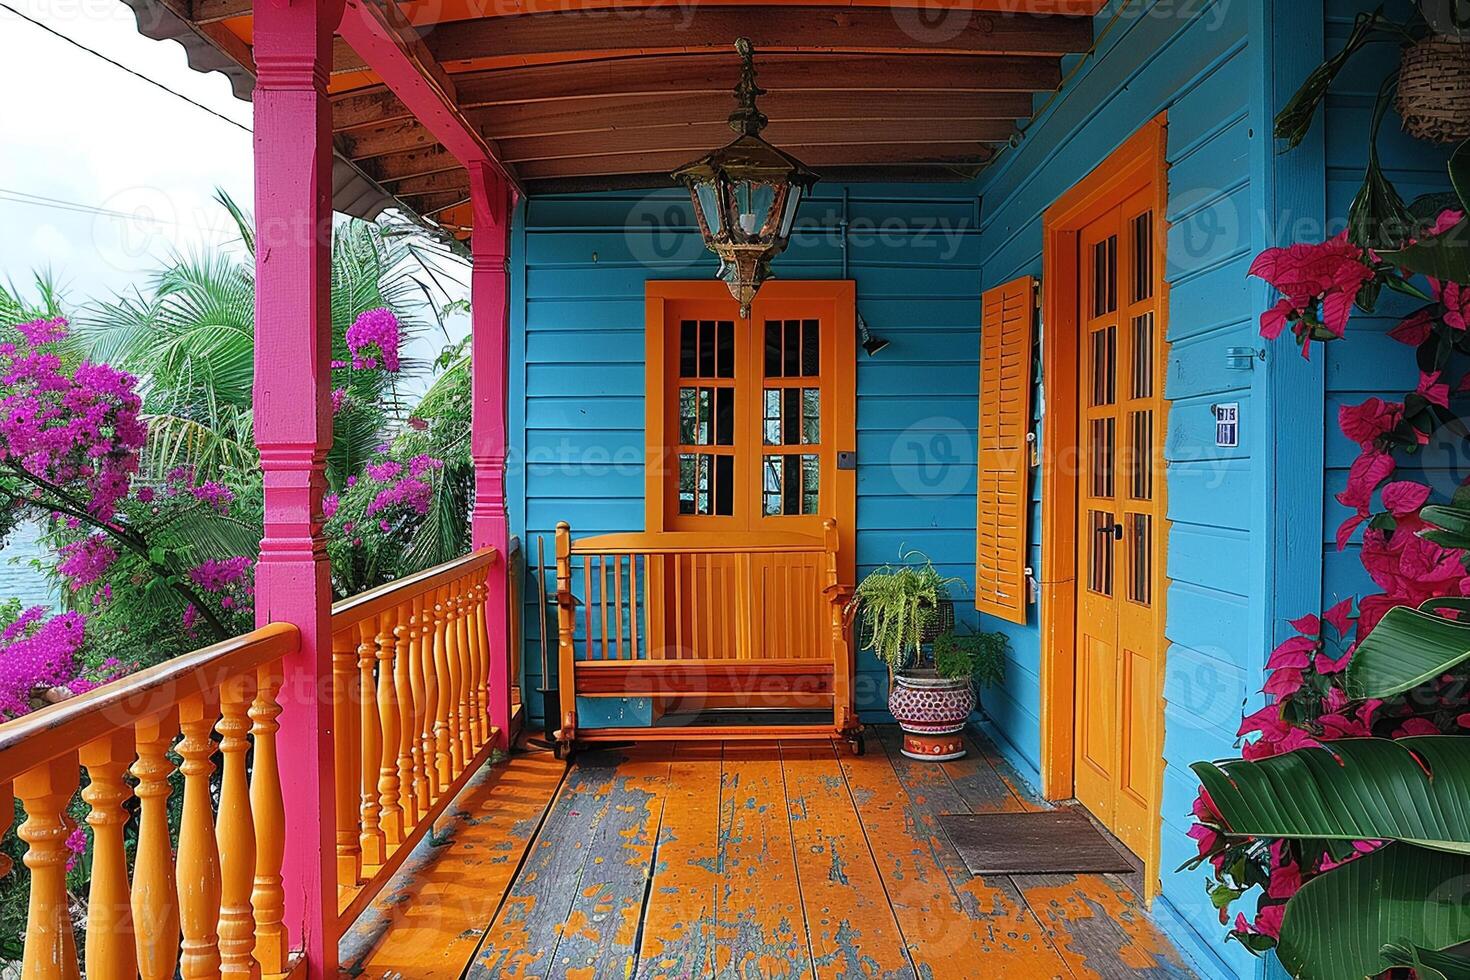 ai gerado brilhantemente colori caribe casa com alegre varanda foto